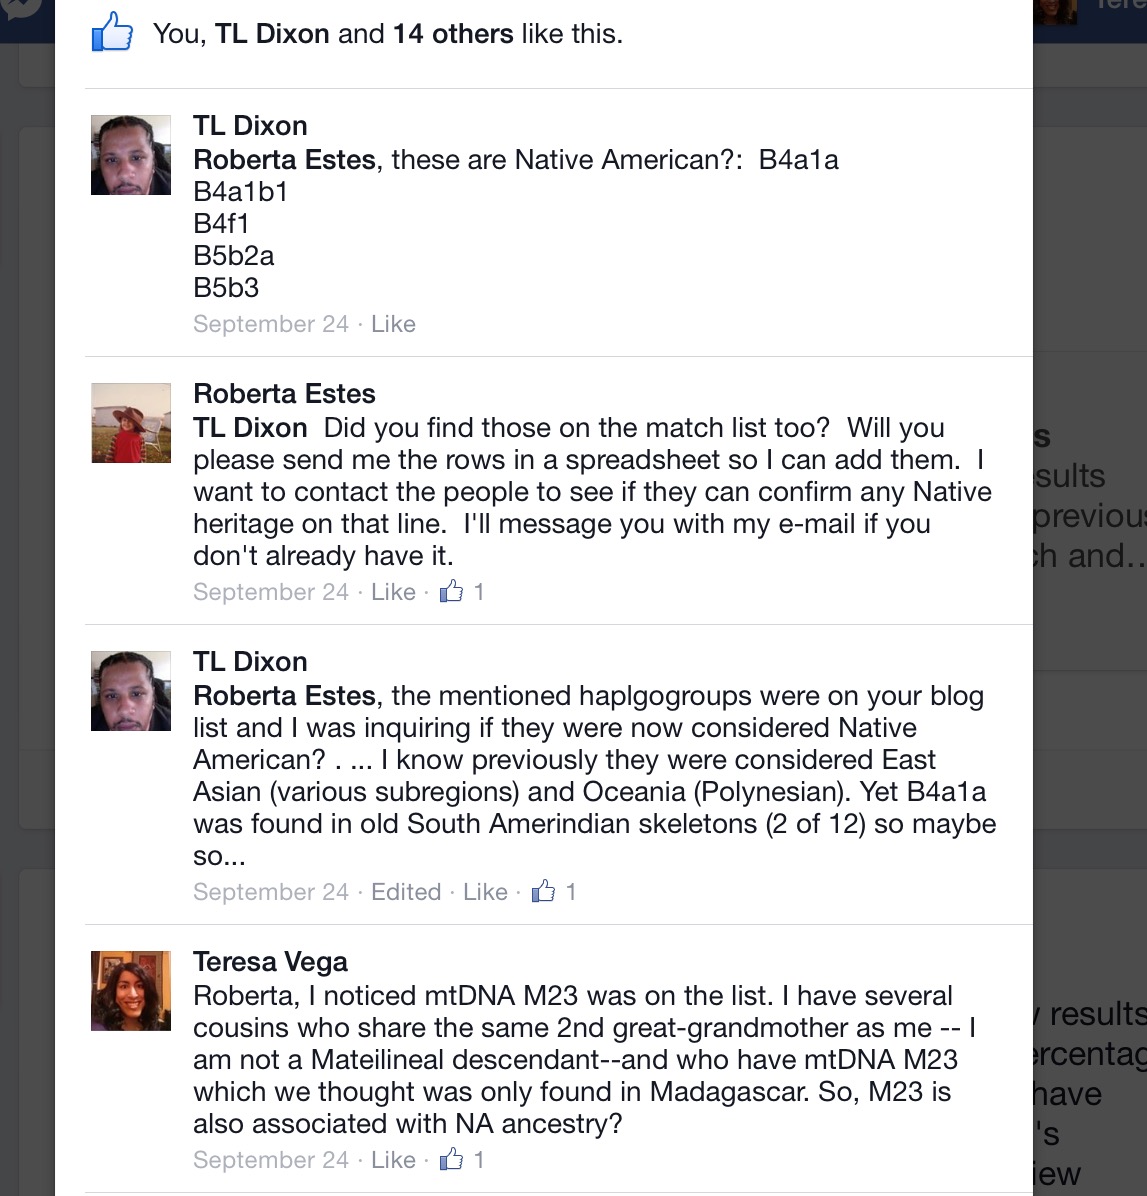 Response to Roberta's post on Sept. 24, 2014